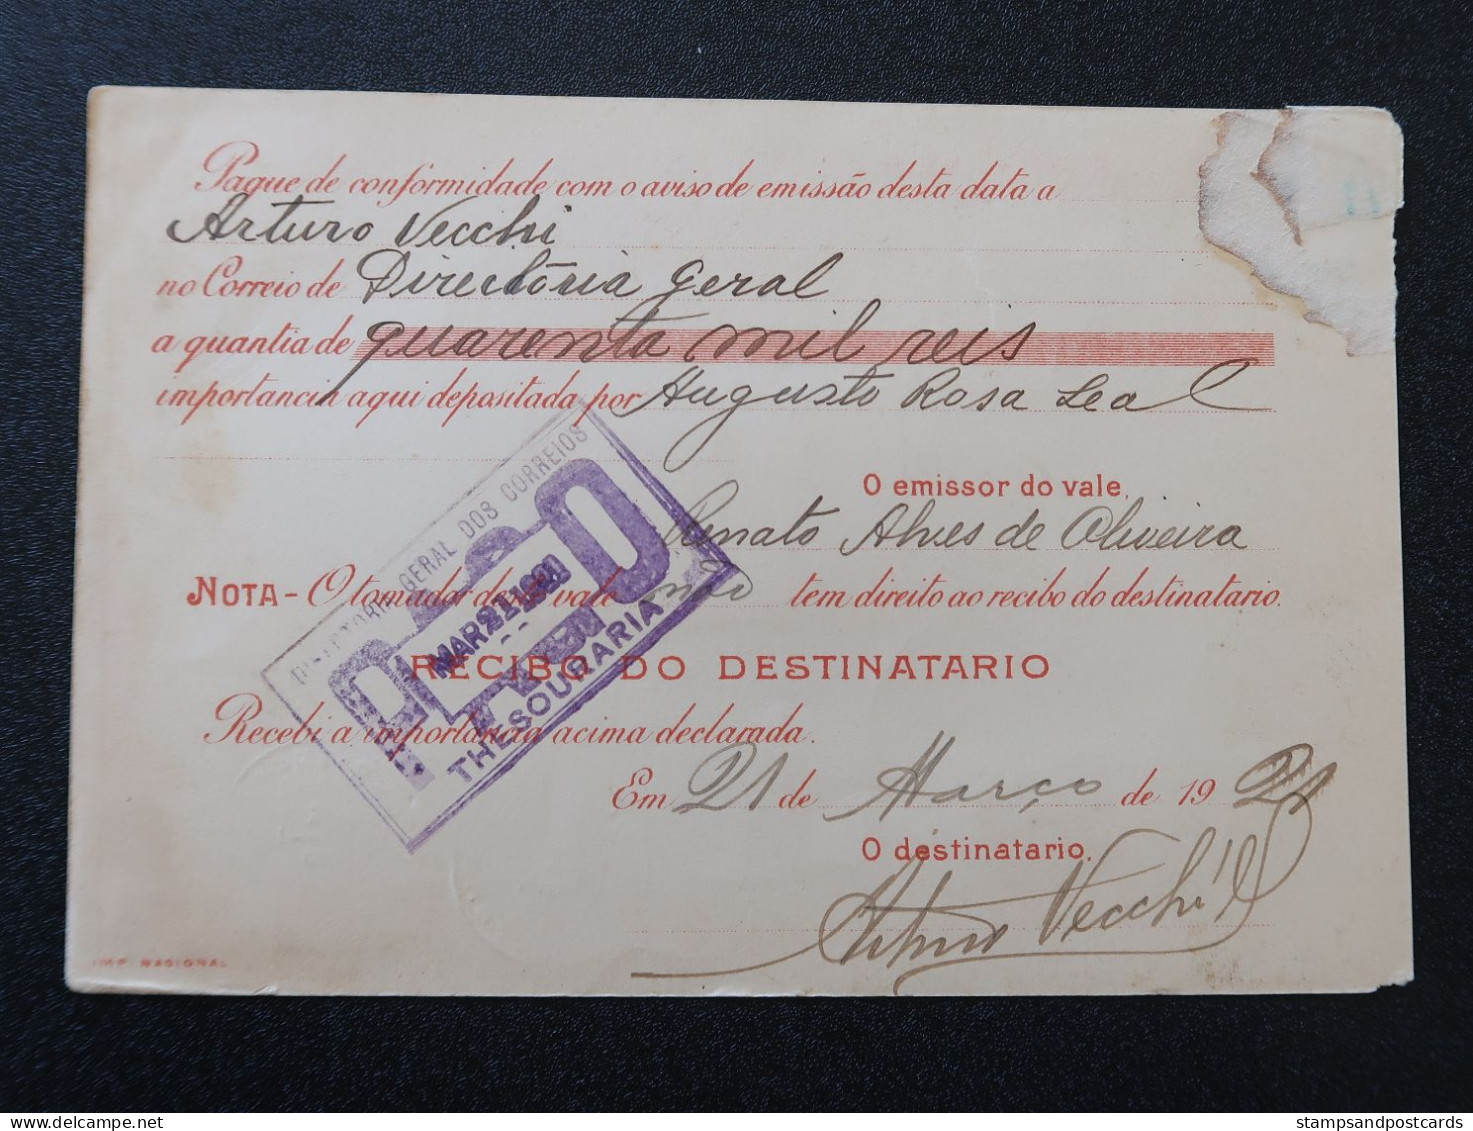 Brèsil Brasil Mandat Vale Postal 1921 Barbacena Minas Gerais Timbre Fiscal Deposito Brazil Money Order Revenue Stamp - Cartas & Documentos